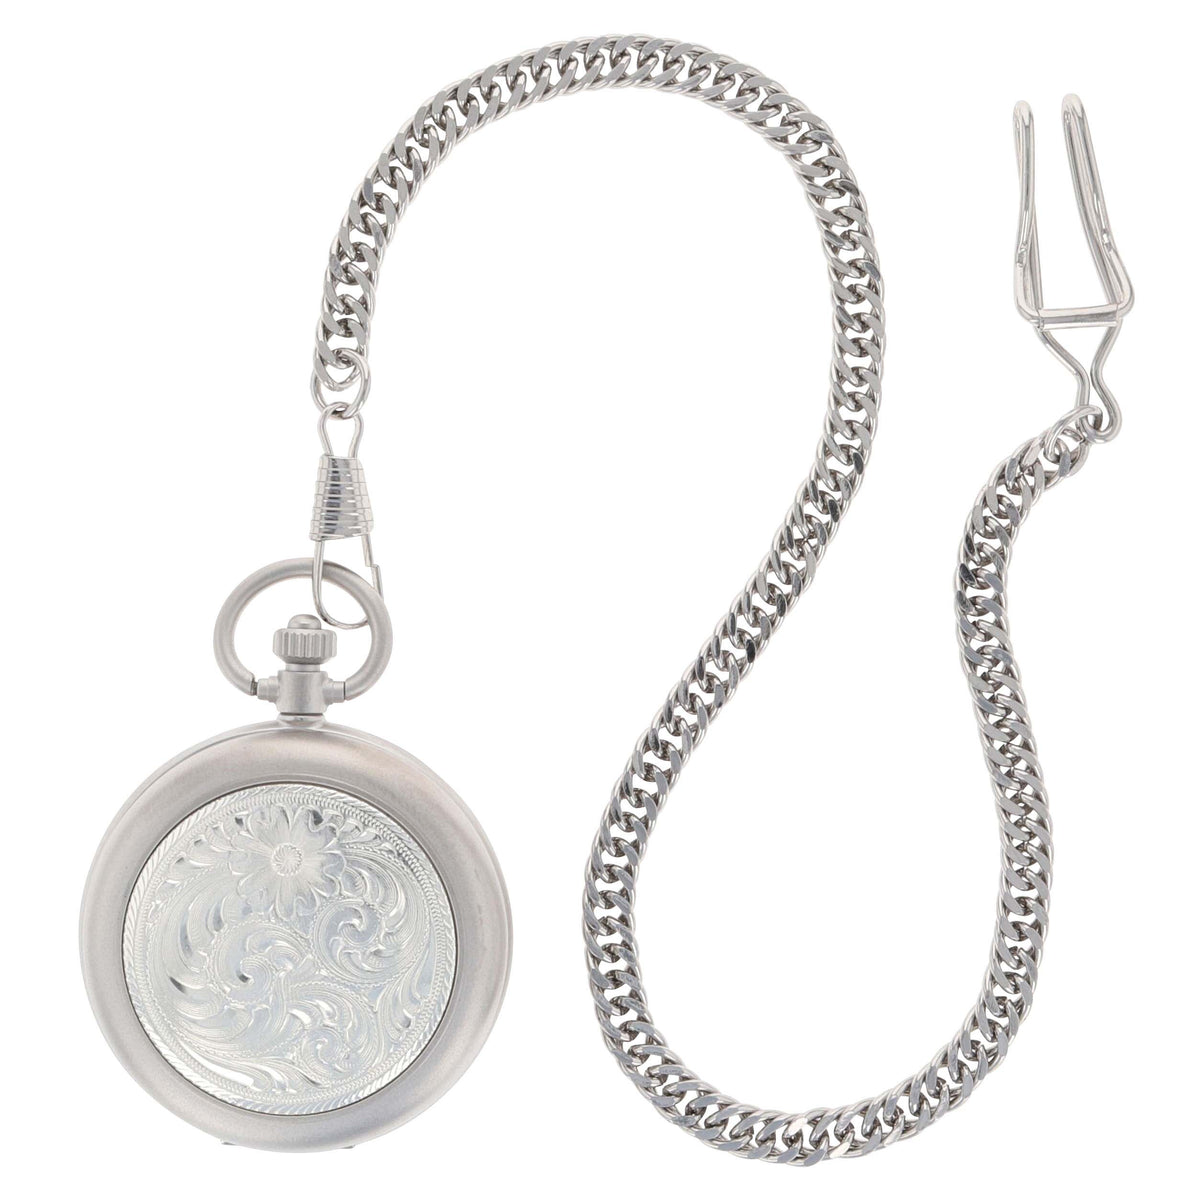 Montana Silversmiths Engraved Silver Pocket Watch